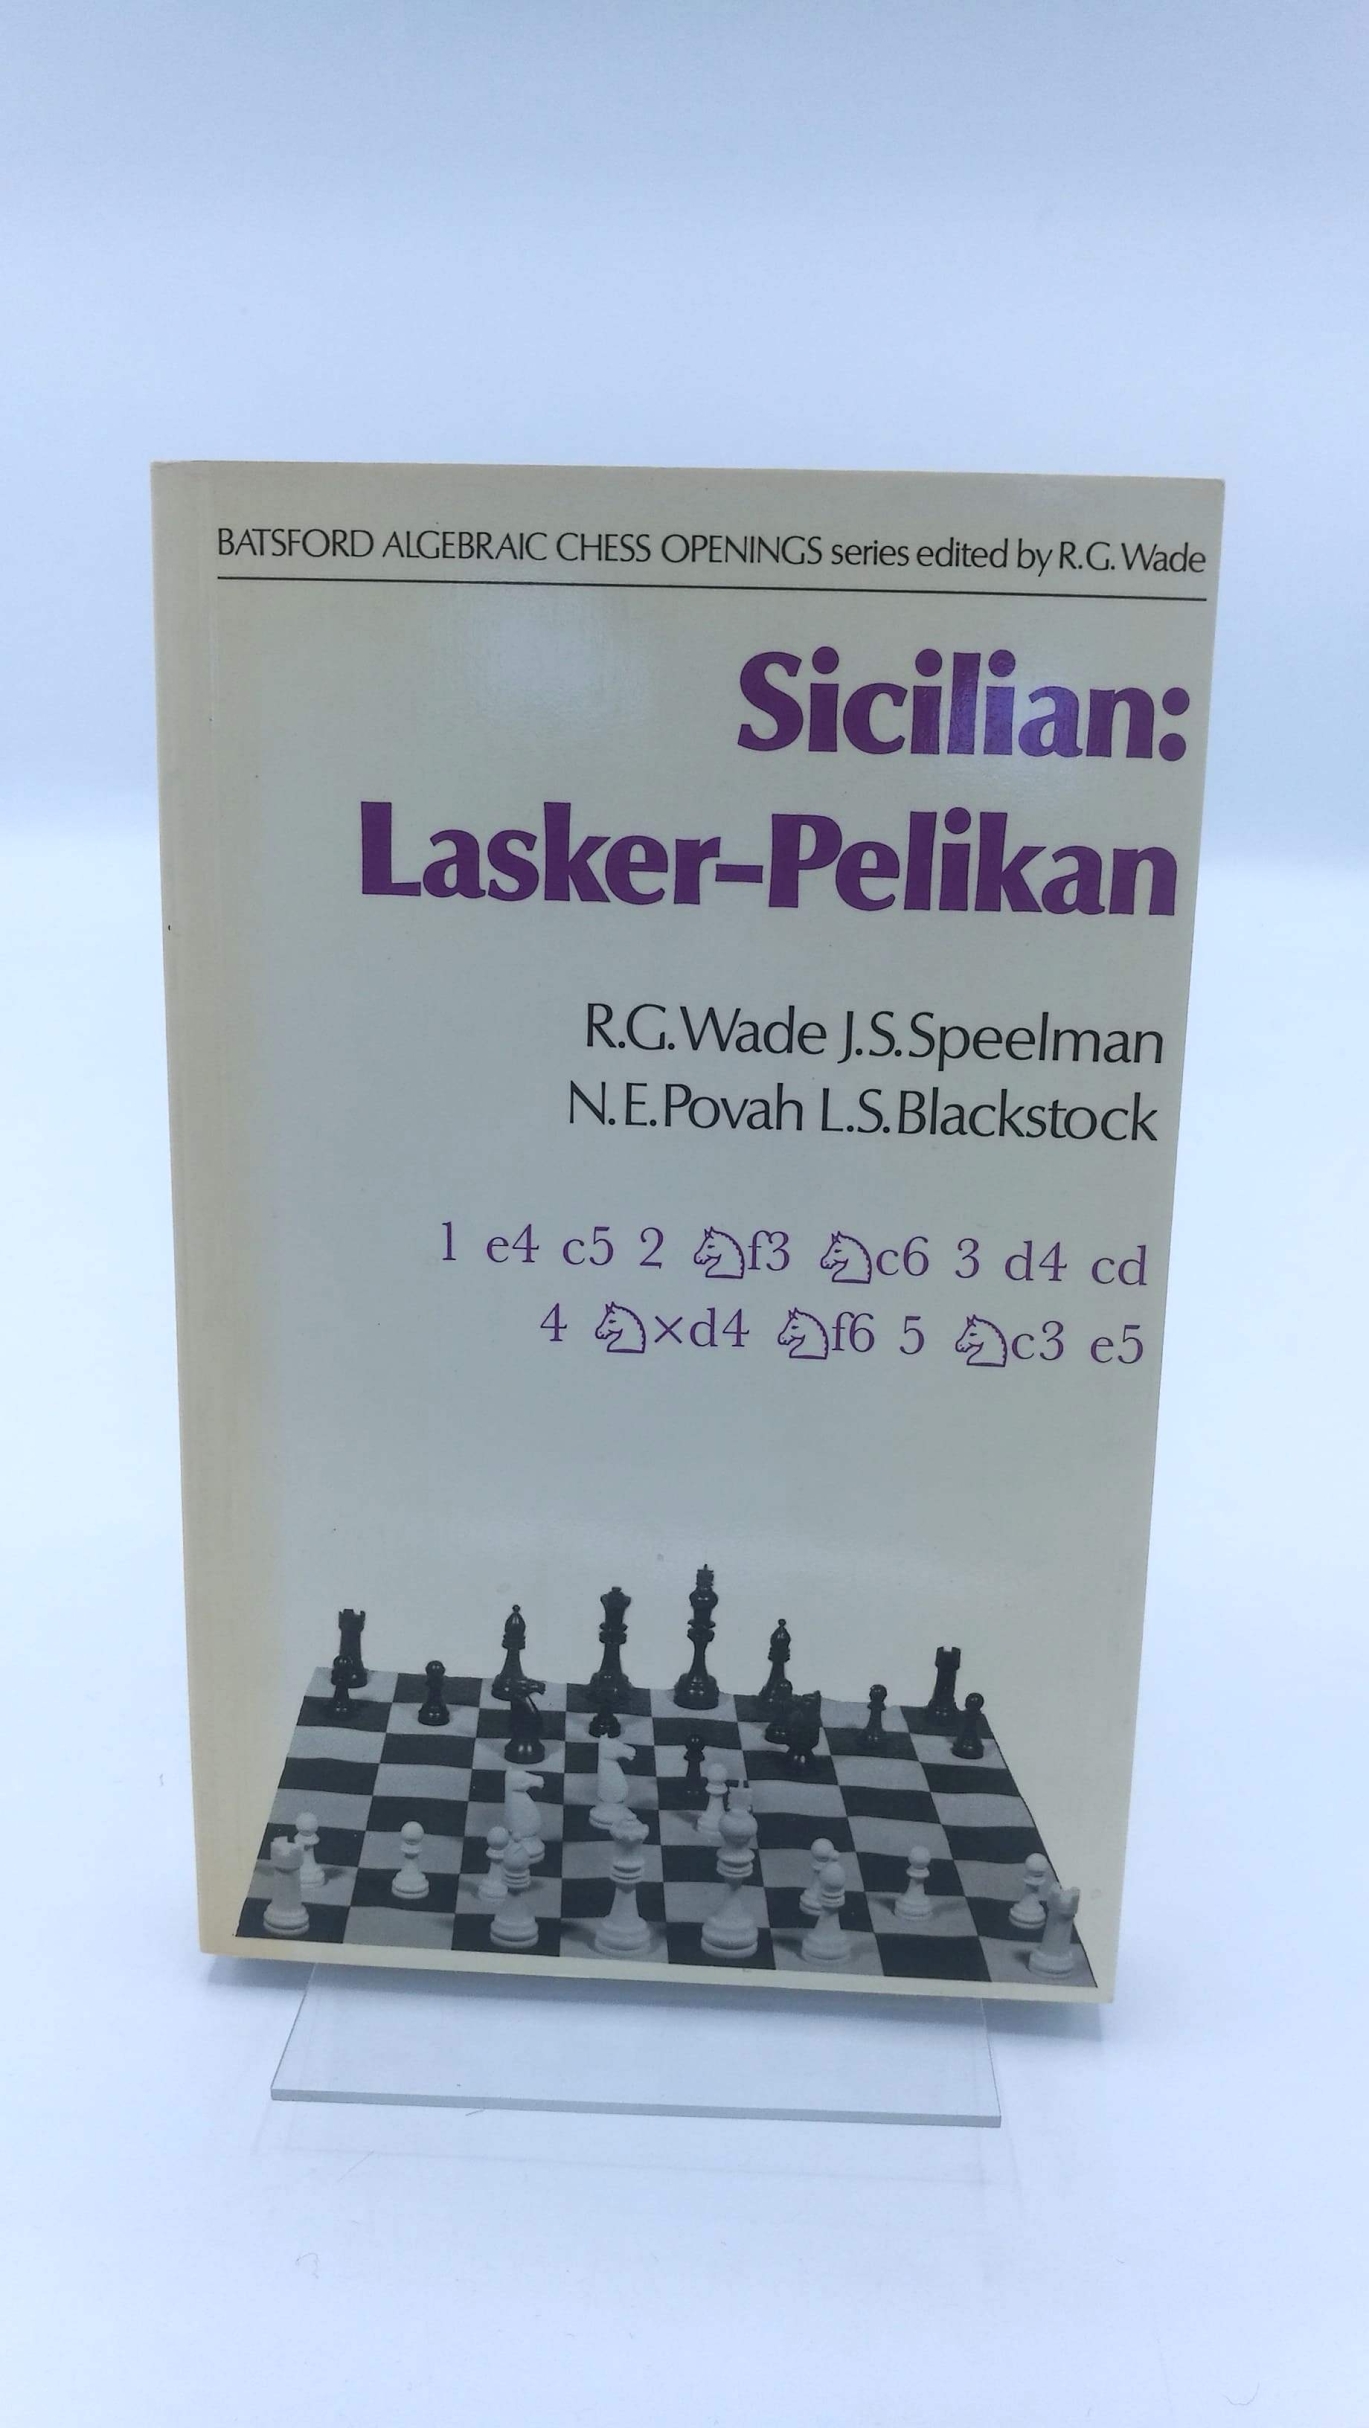 Wade, R.G.: Sicilian: Lasker-Pelikan